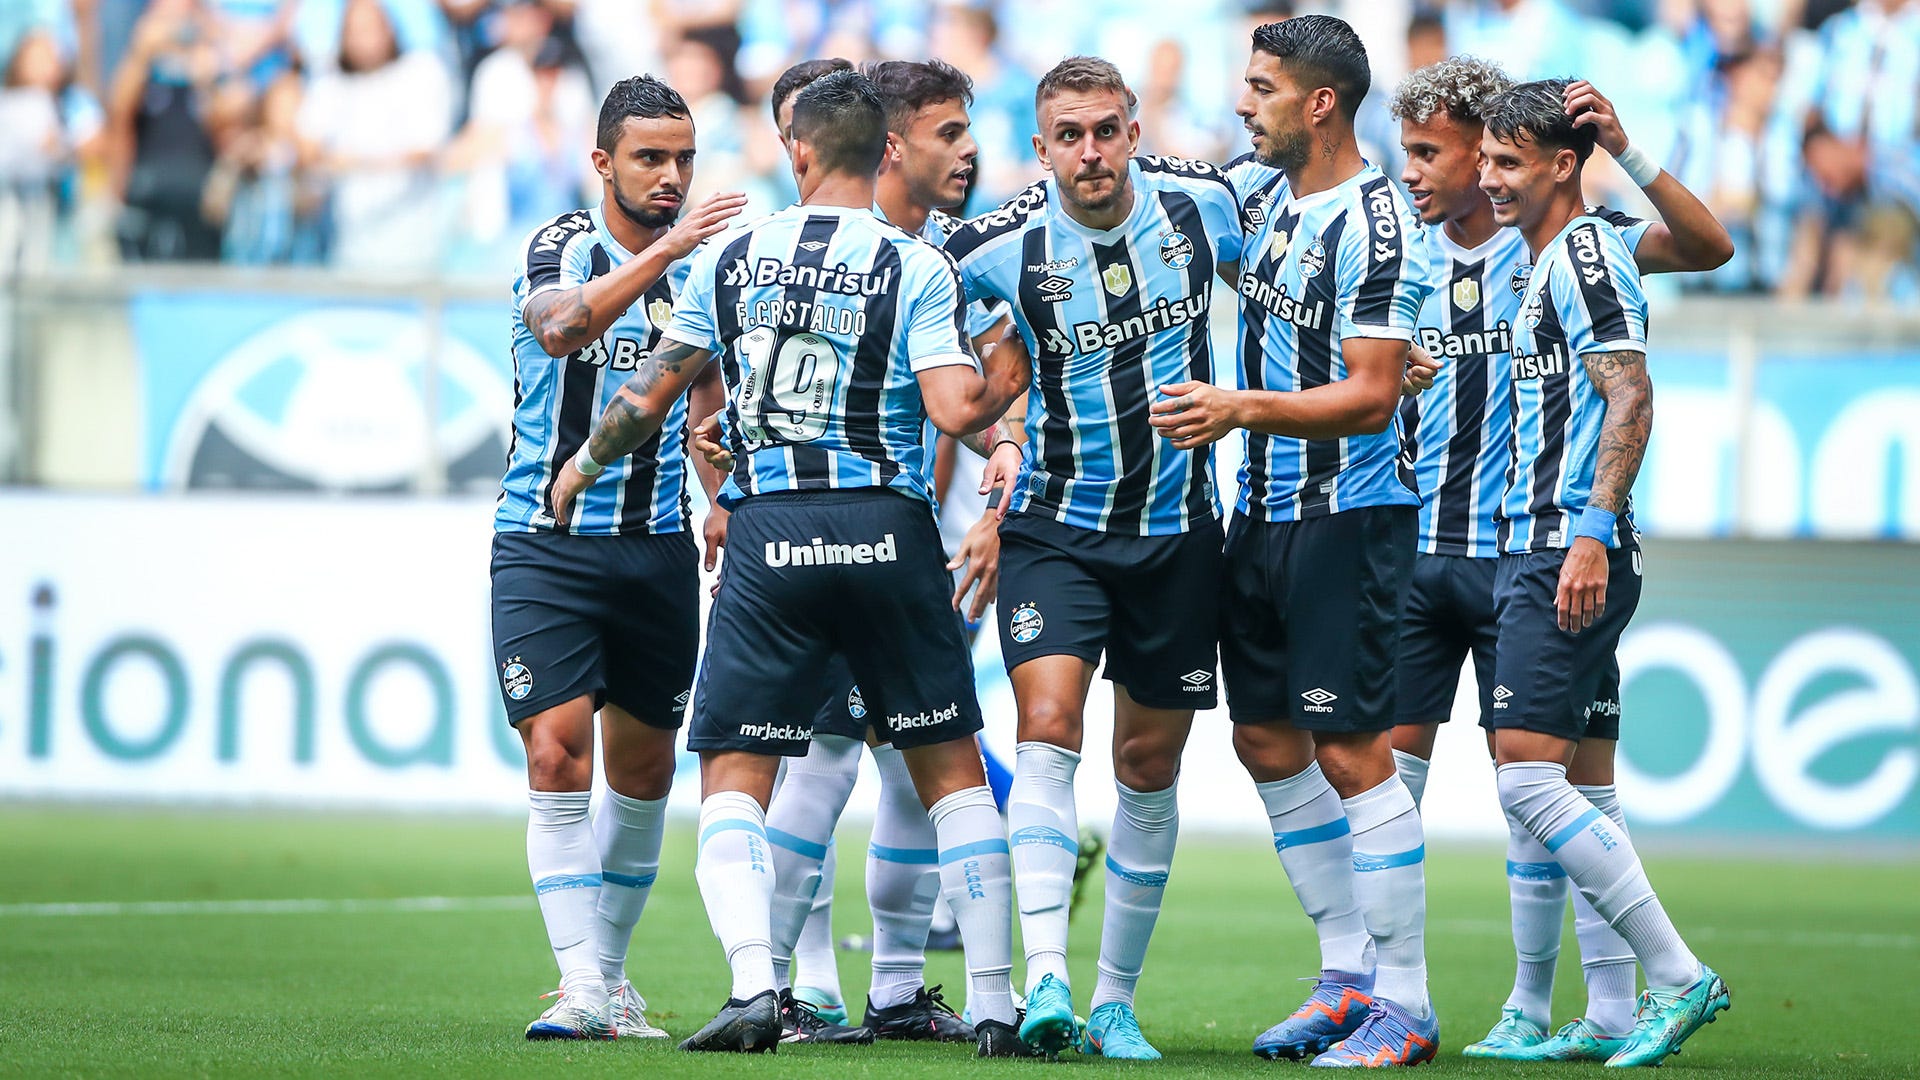 Grêmio vs Náutico: A Clash of Brazilian Football Giants